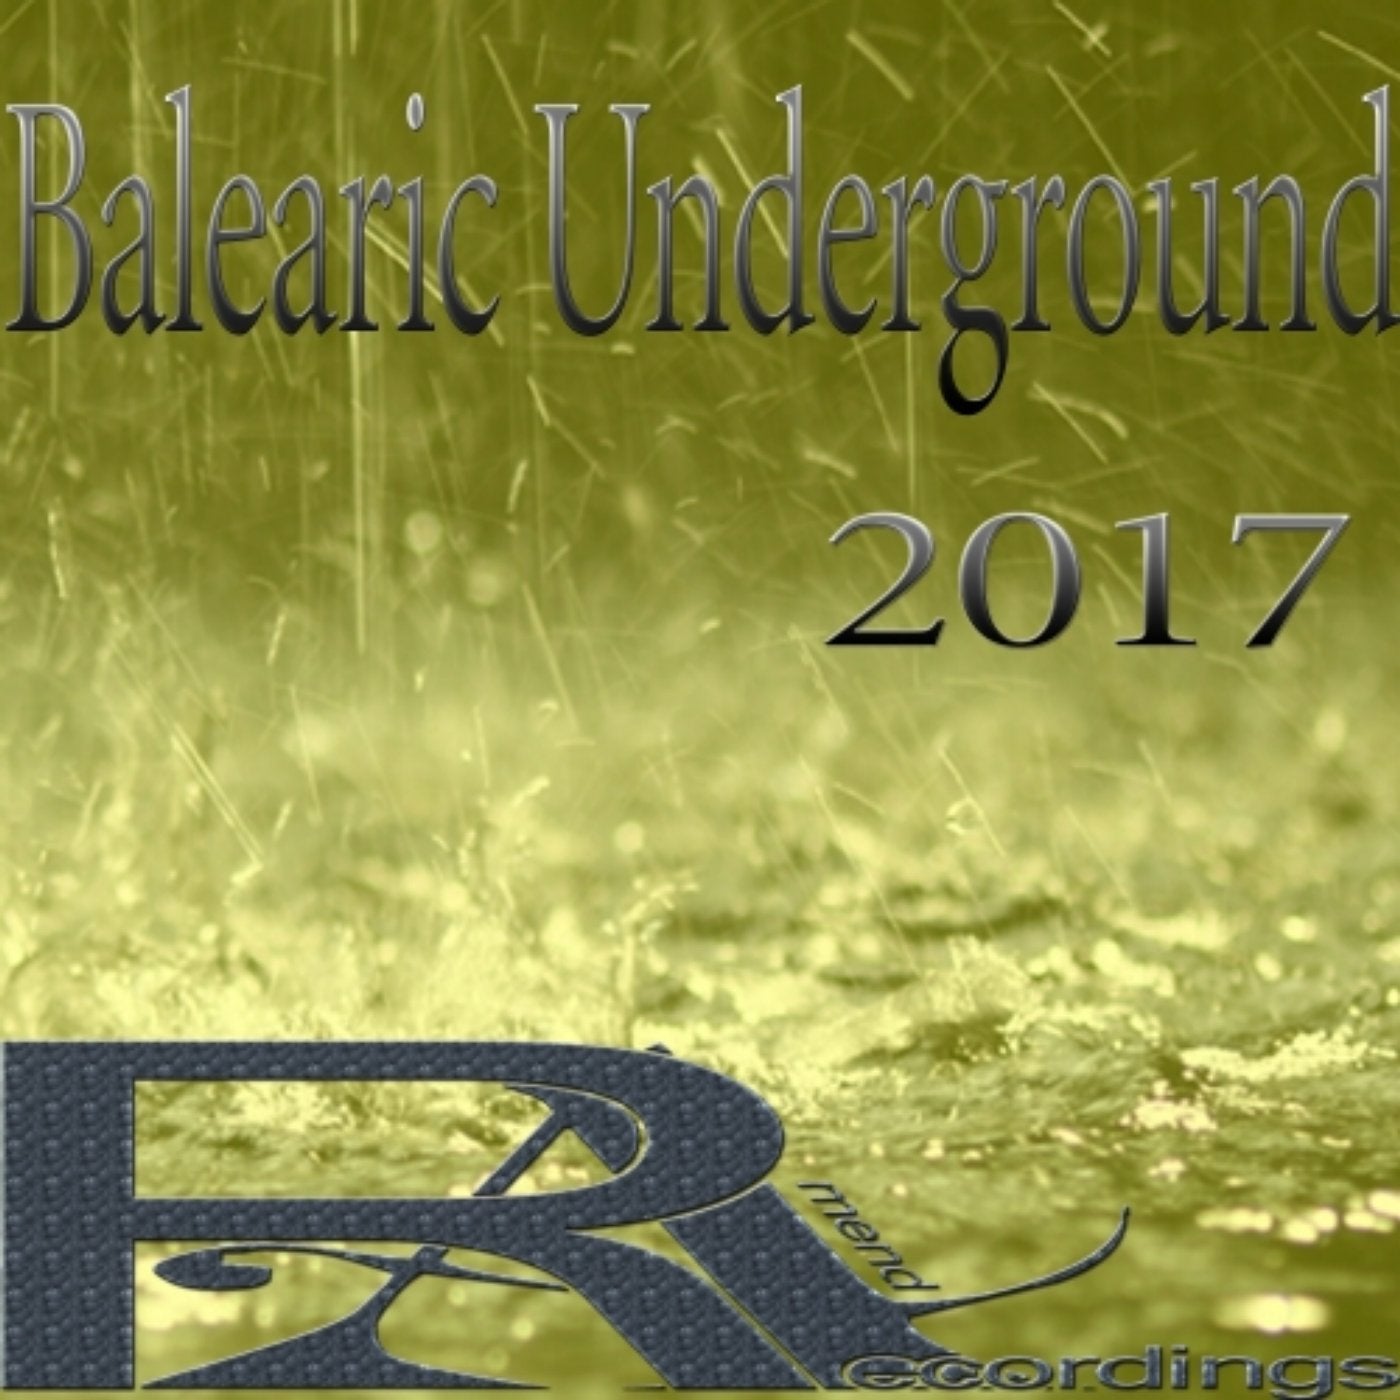 Balearic Underground 2017